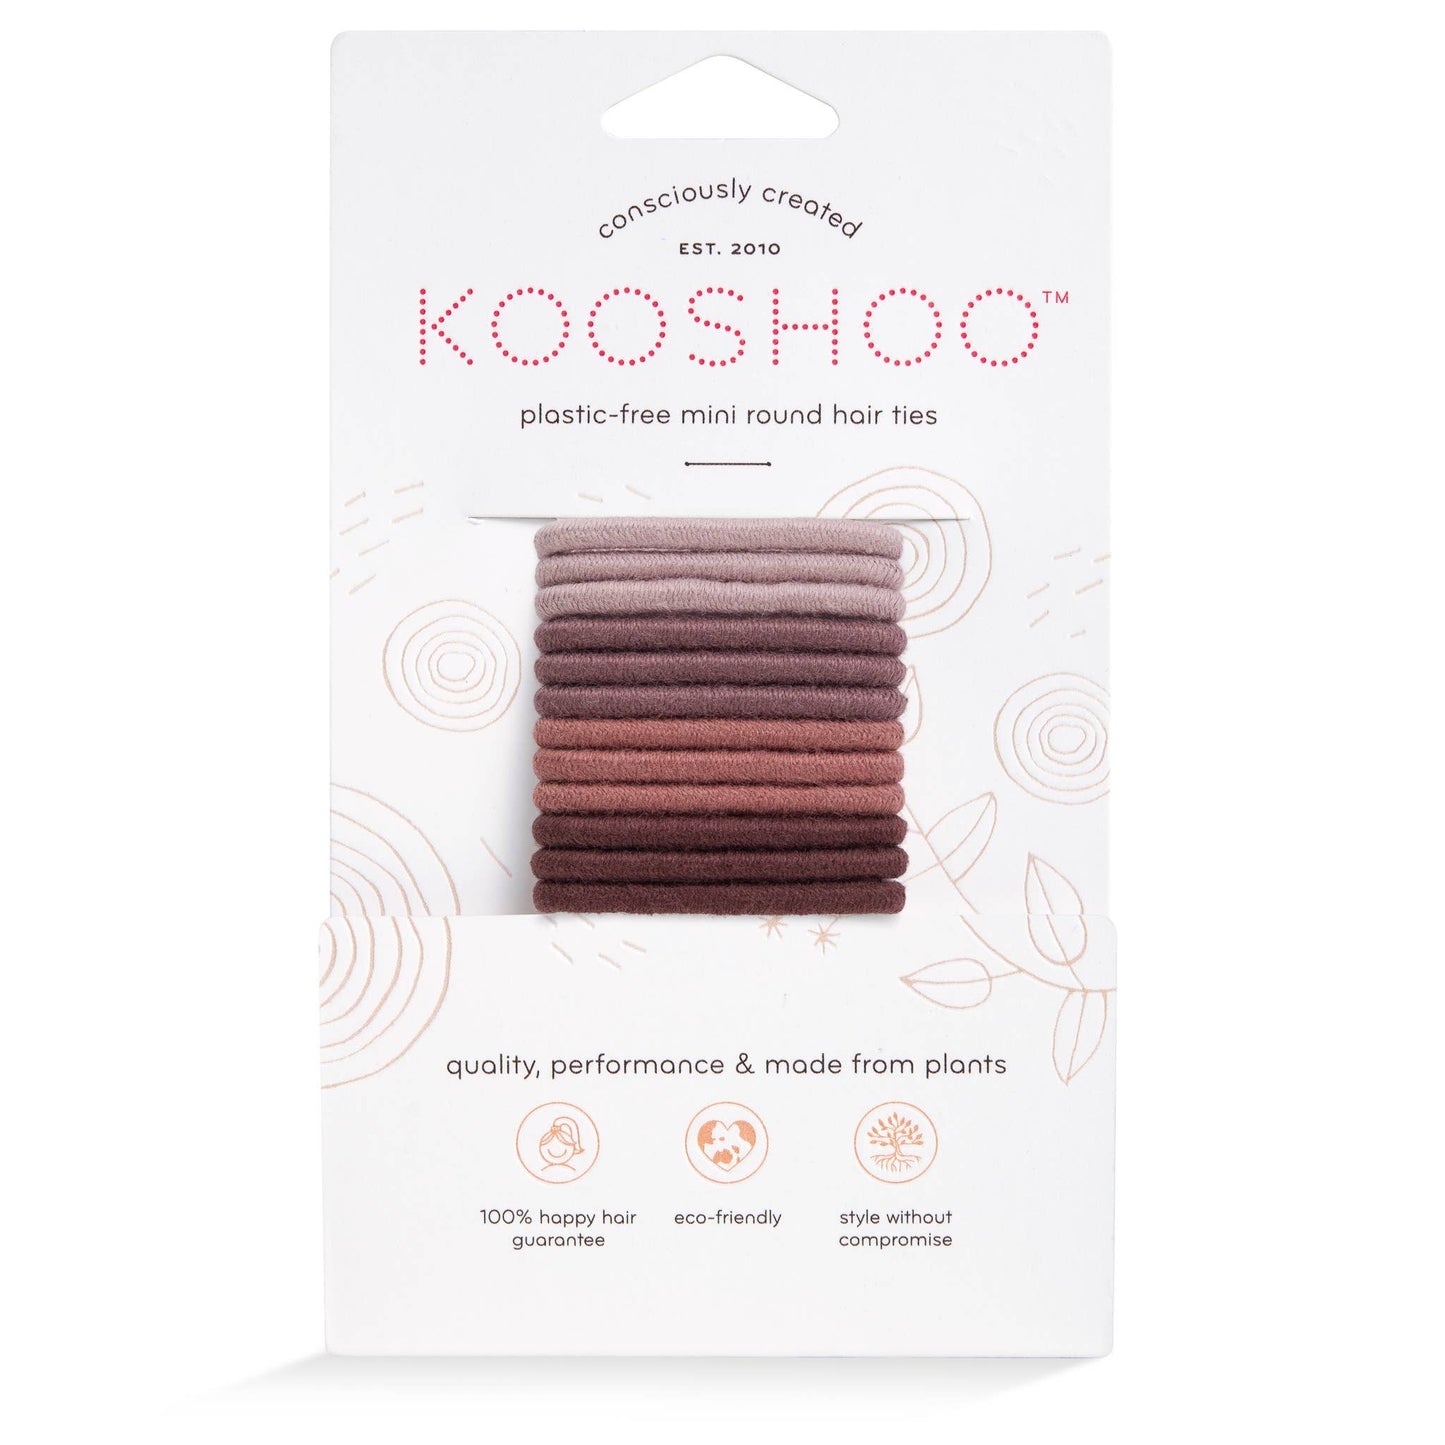 KOOSHOO - Plastic-free Round Mini Hair Ties - 12-pack